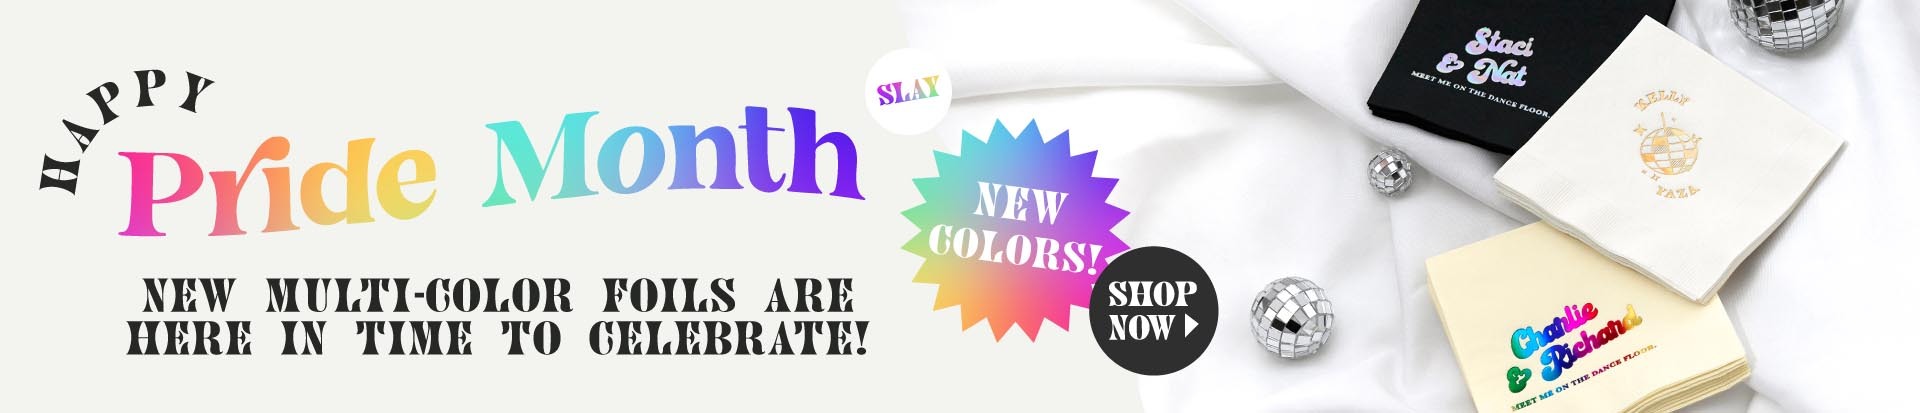 Happy Pride Month: New Multi Color Foils Are Here to Celebrate